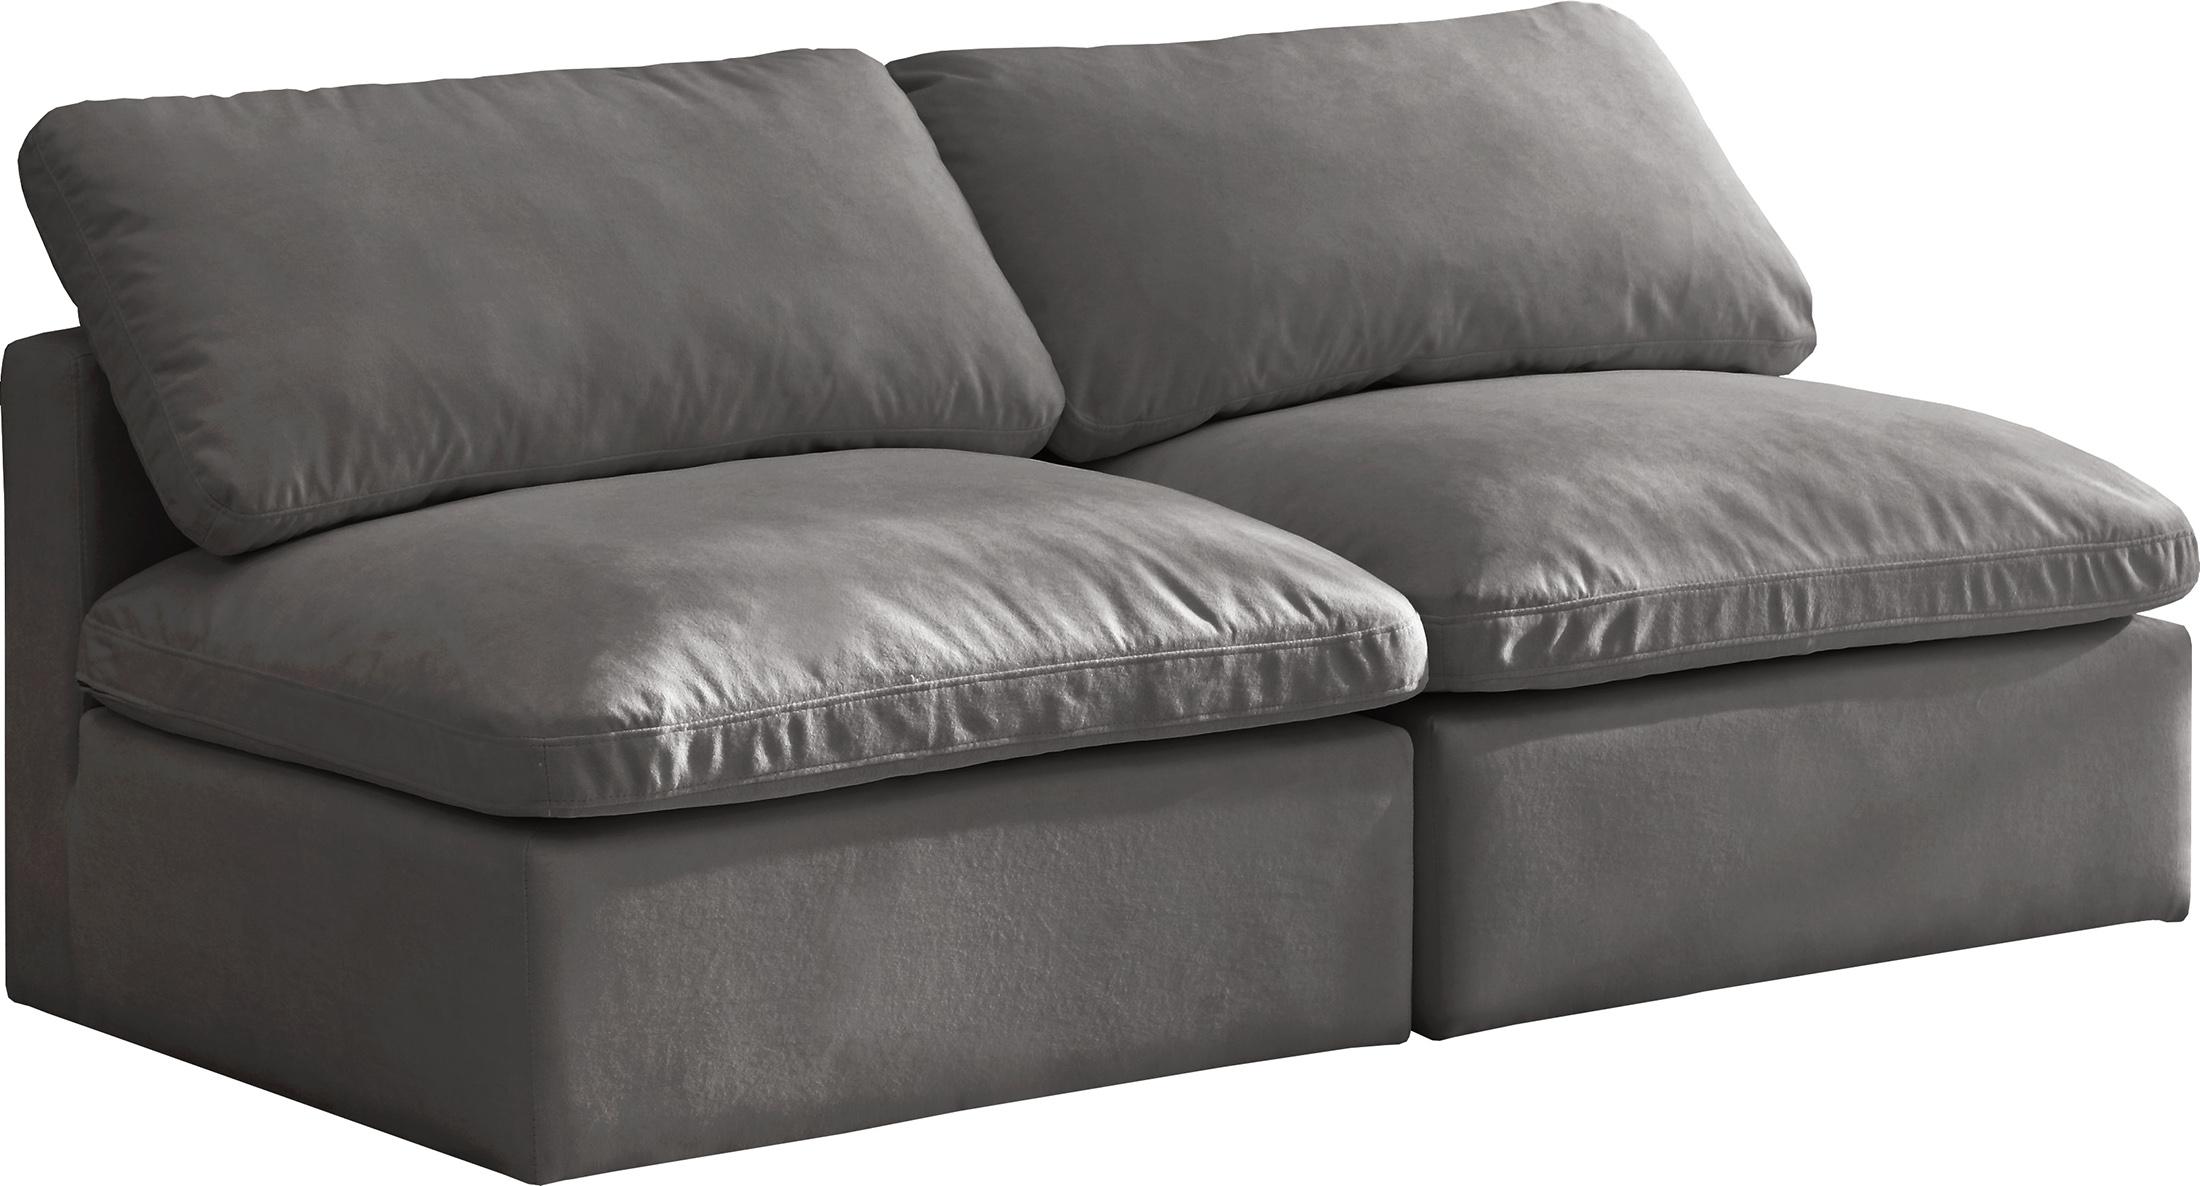 Contemporary, Modern Modular Sofa Cloud GREY GREY-Mod-S-70-Cloud in Gray Fabric